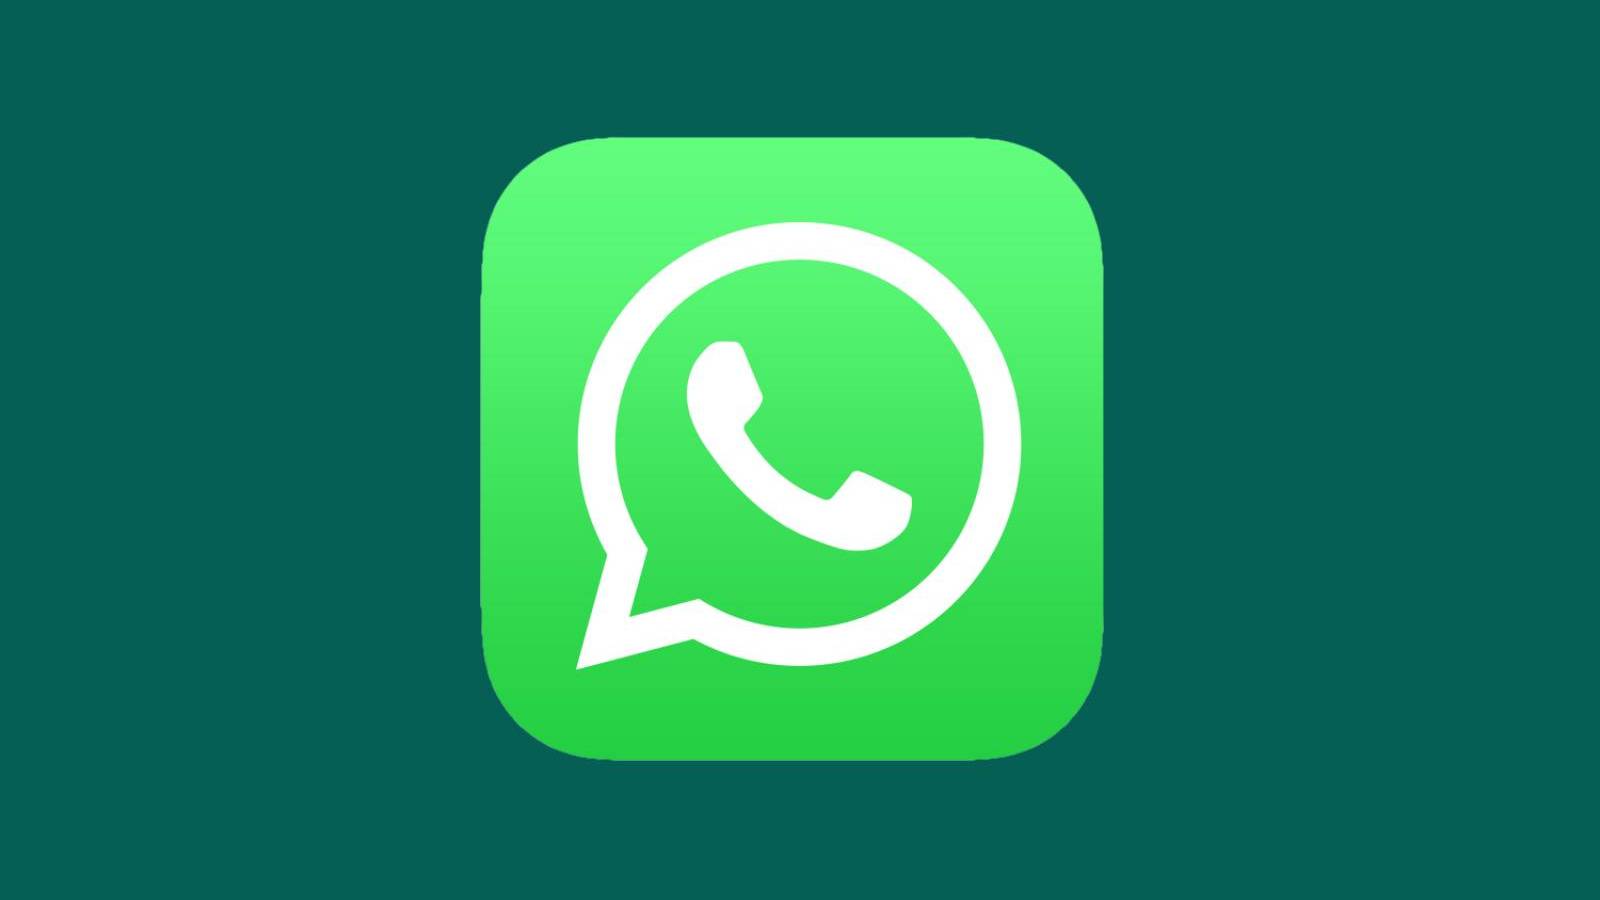 WhatsApp Schimbarea Creata Secret Toate iPhone Android